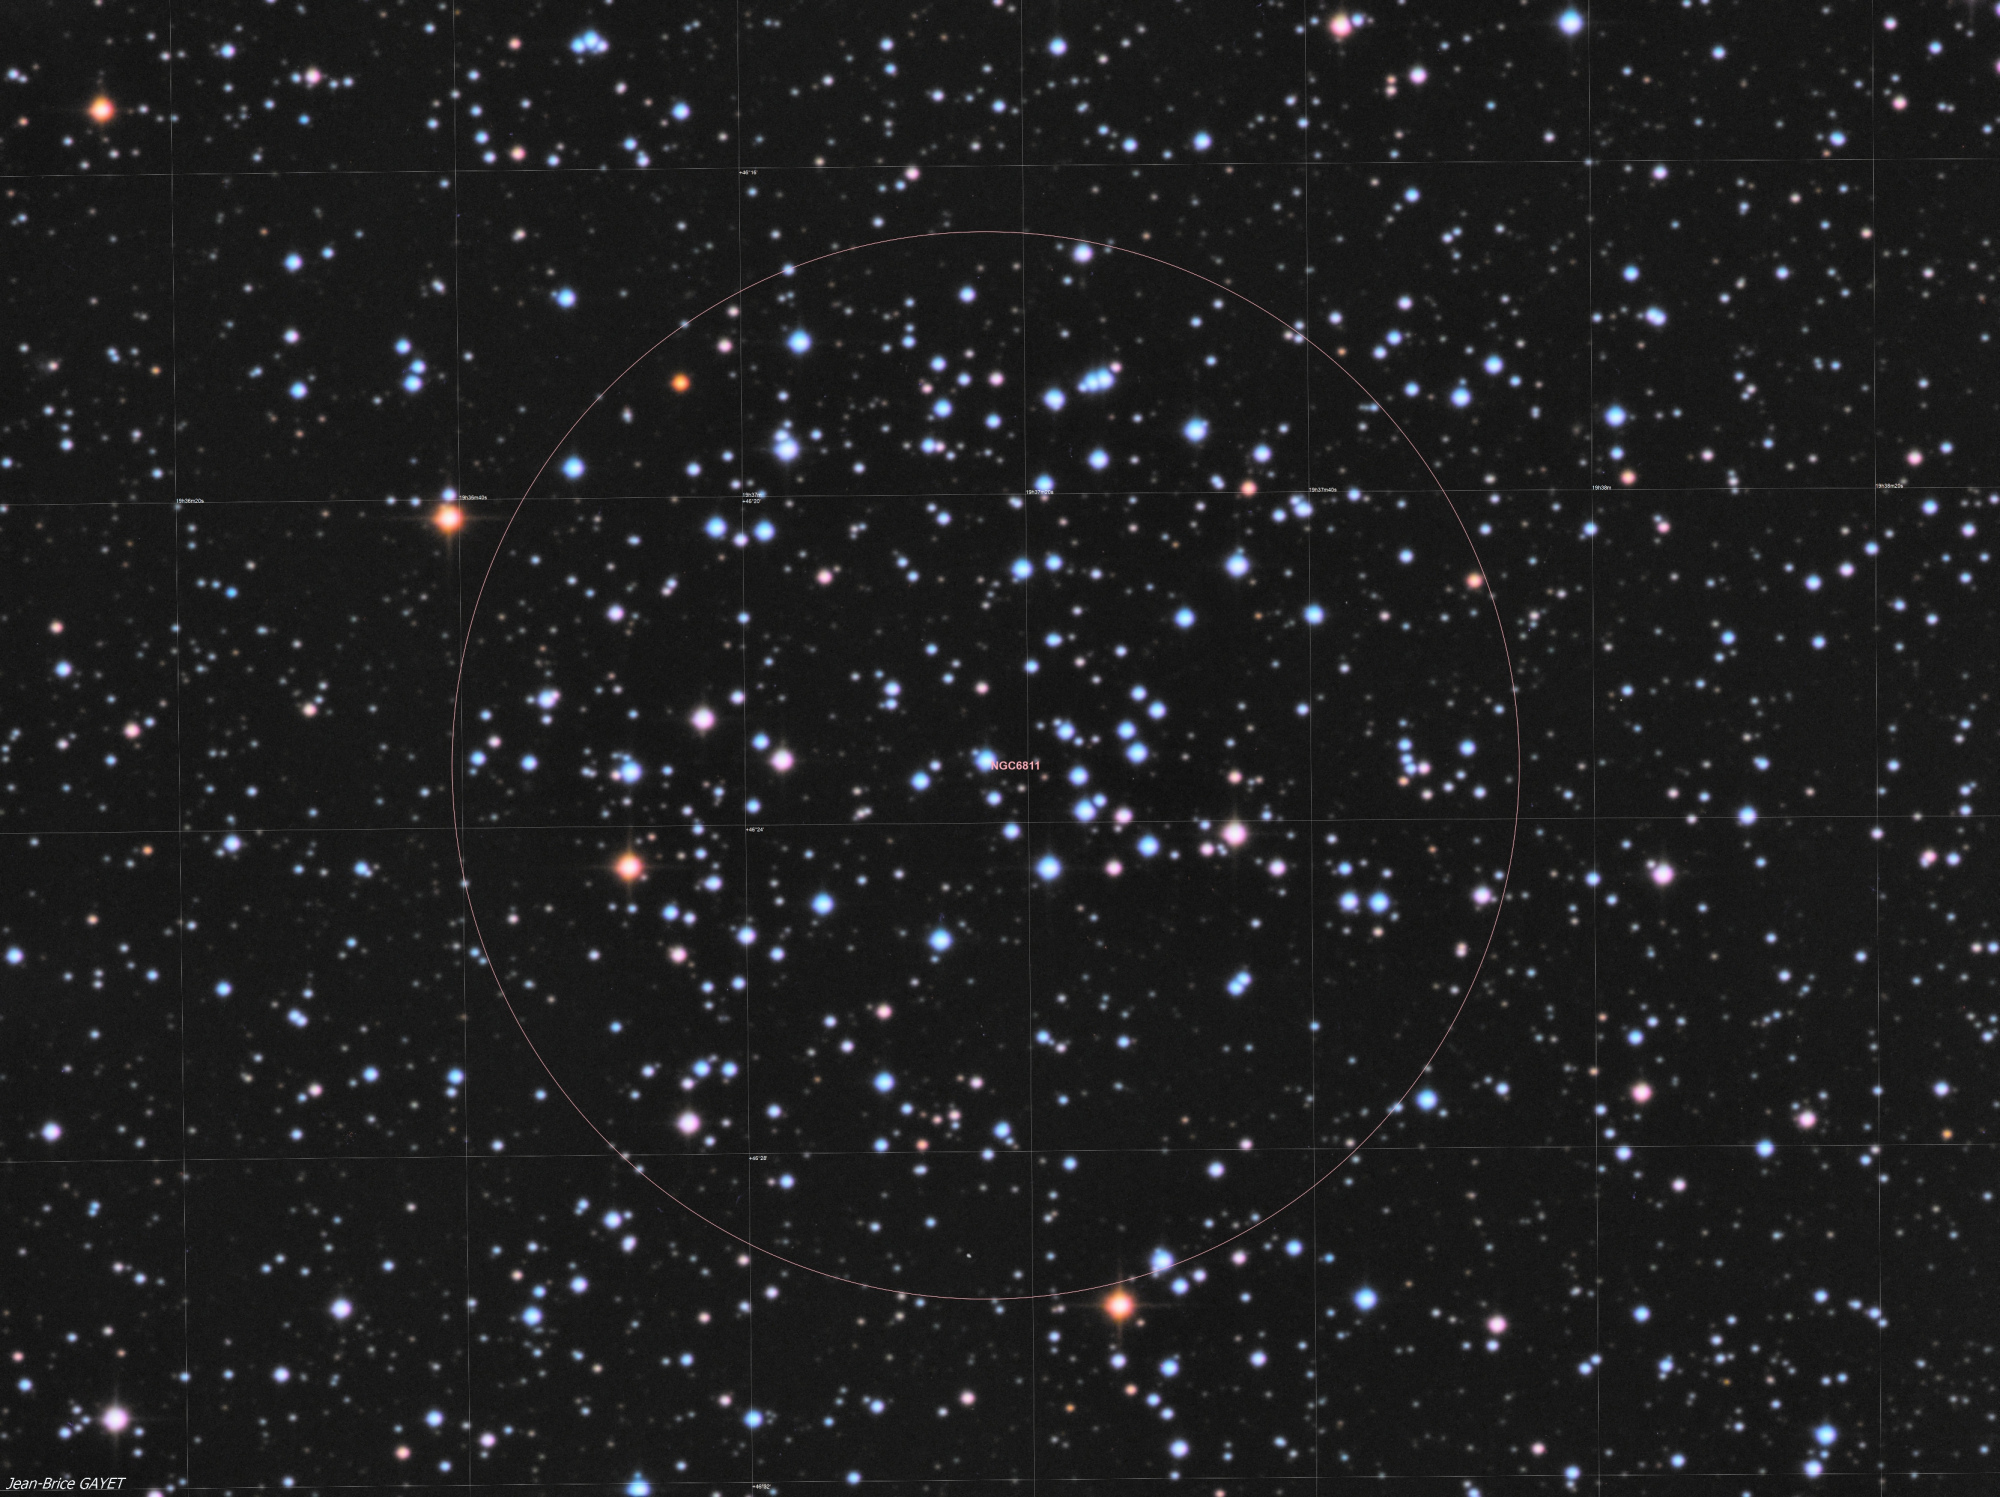 5c99e6640f953_NGC6811Jean-BriceGAYETAnnote.thumb.jpg.9caffbfecf73fa96a84a8ffec10578a3.jpg